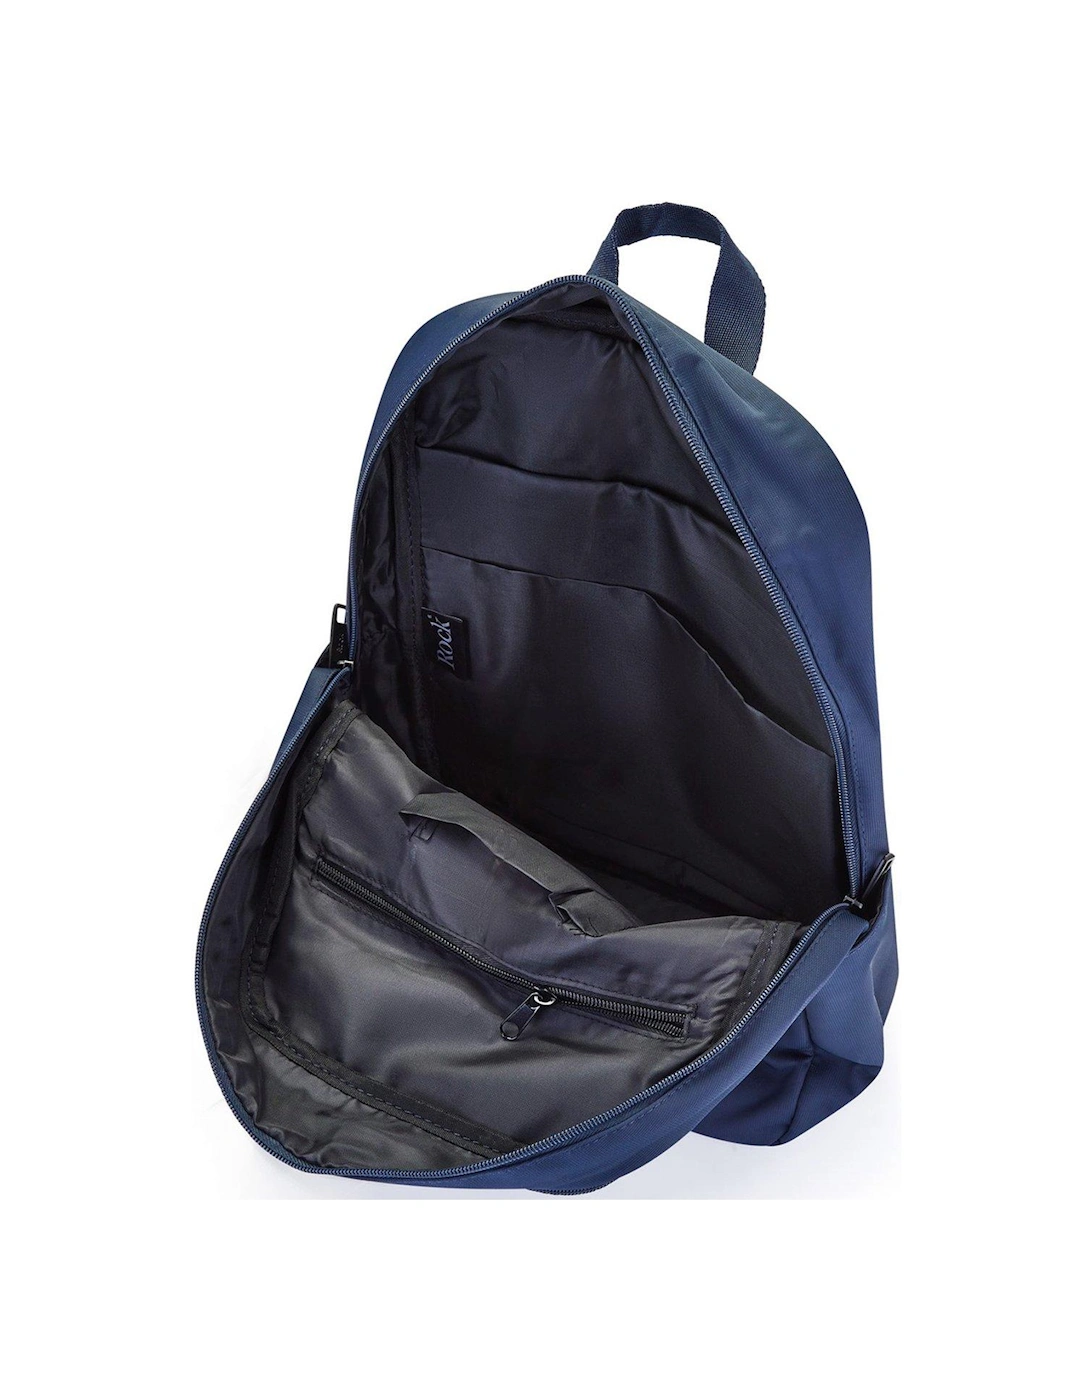 Rock Platinum Lightweight On-Board Under Seat Compliant Backpack - Navy